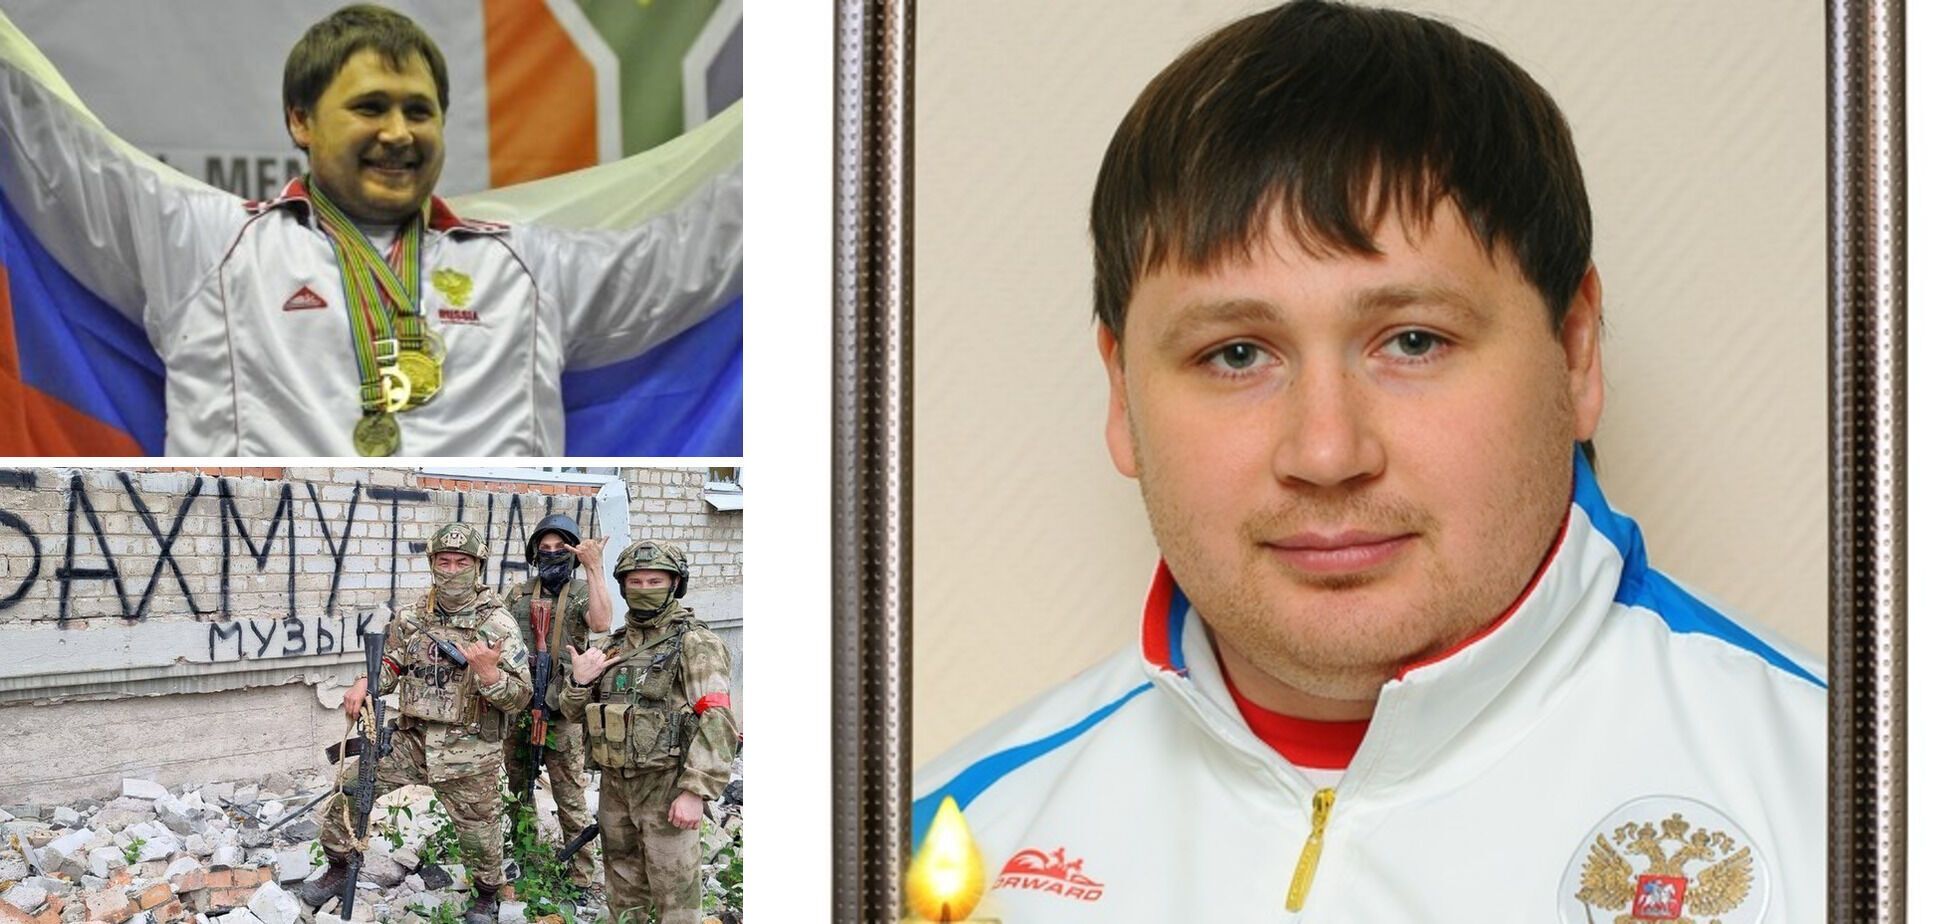 Universiade champion went to kill Ukrainians